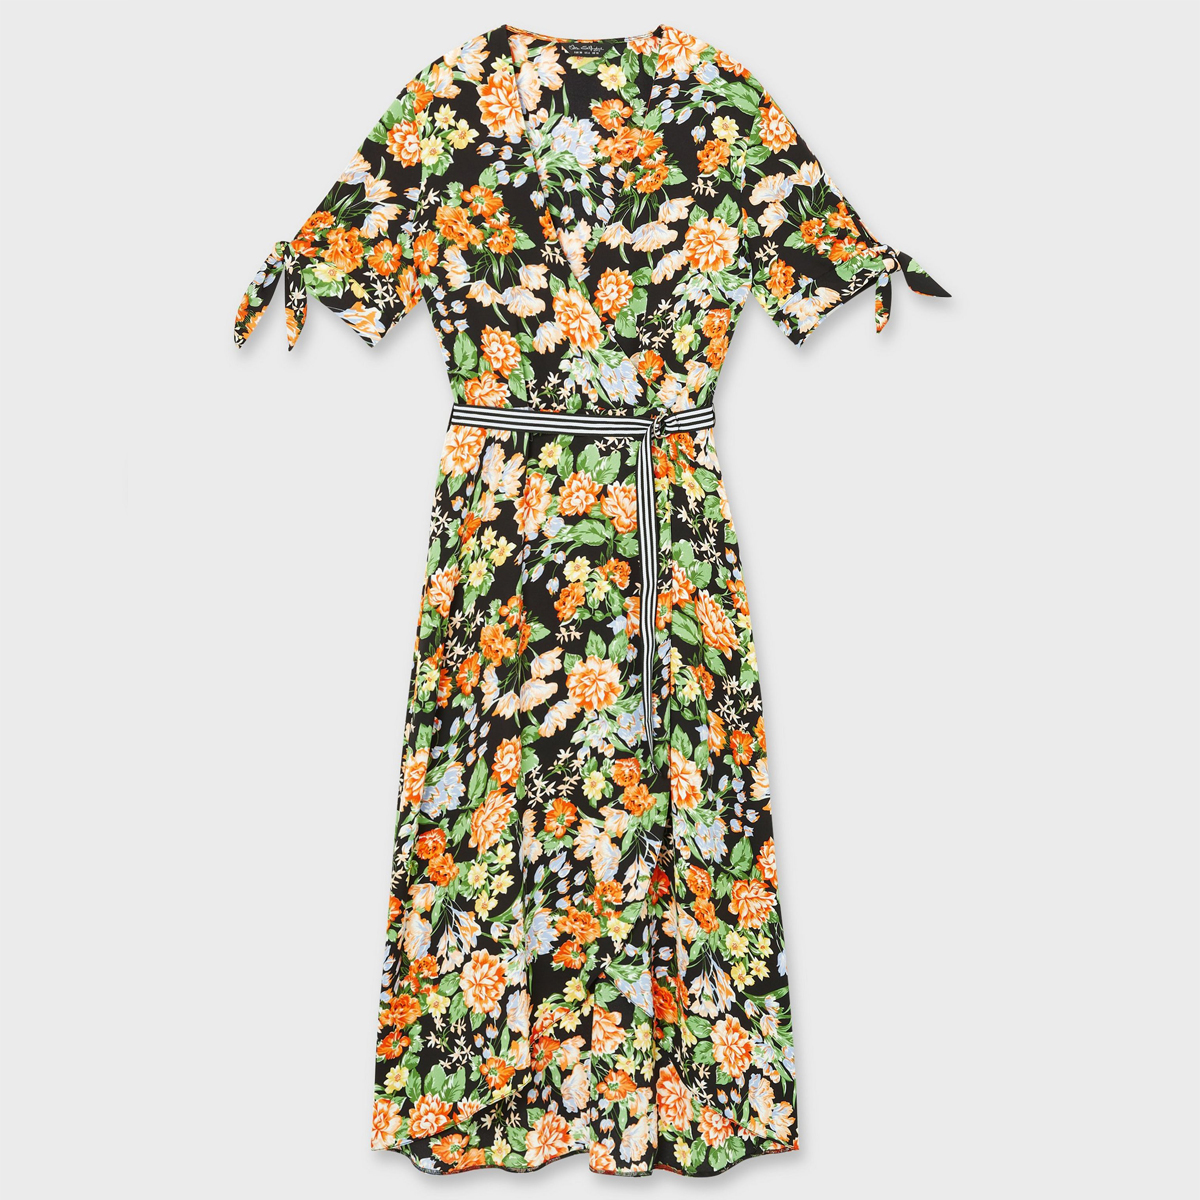 premium floral tea dress